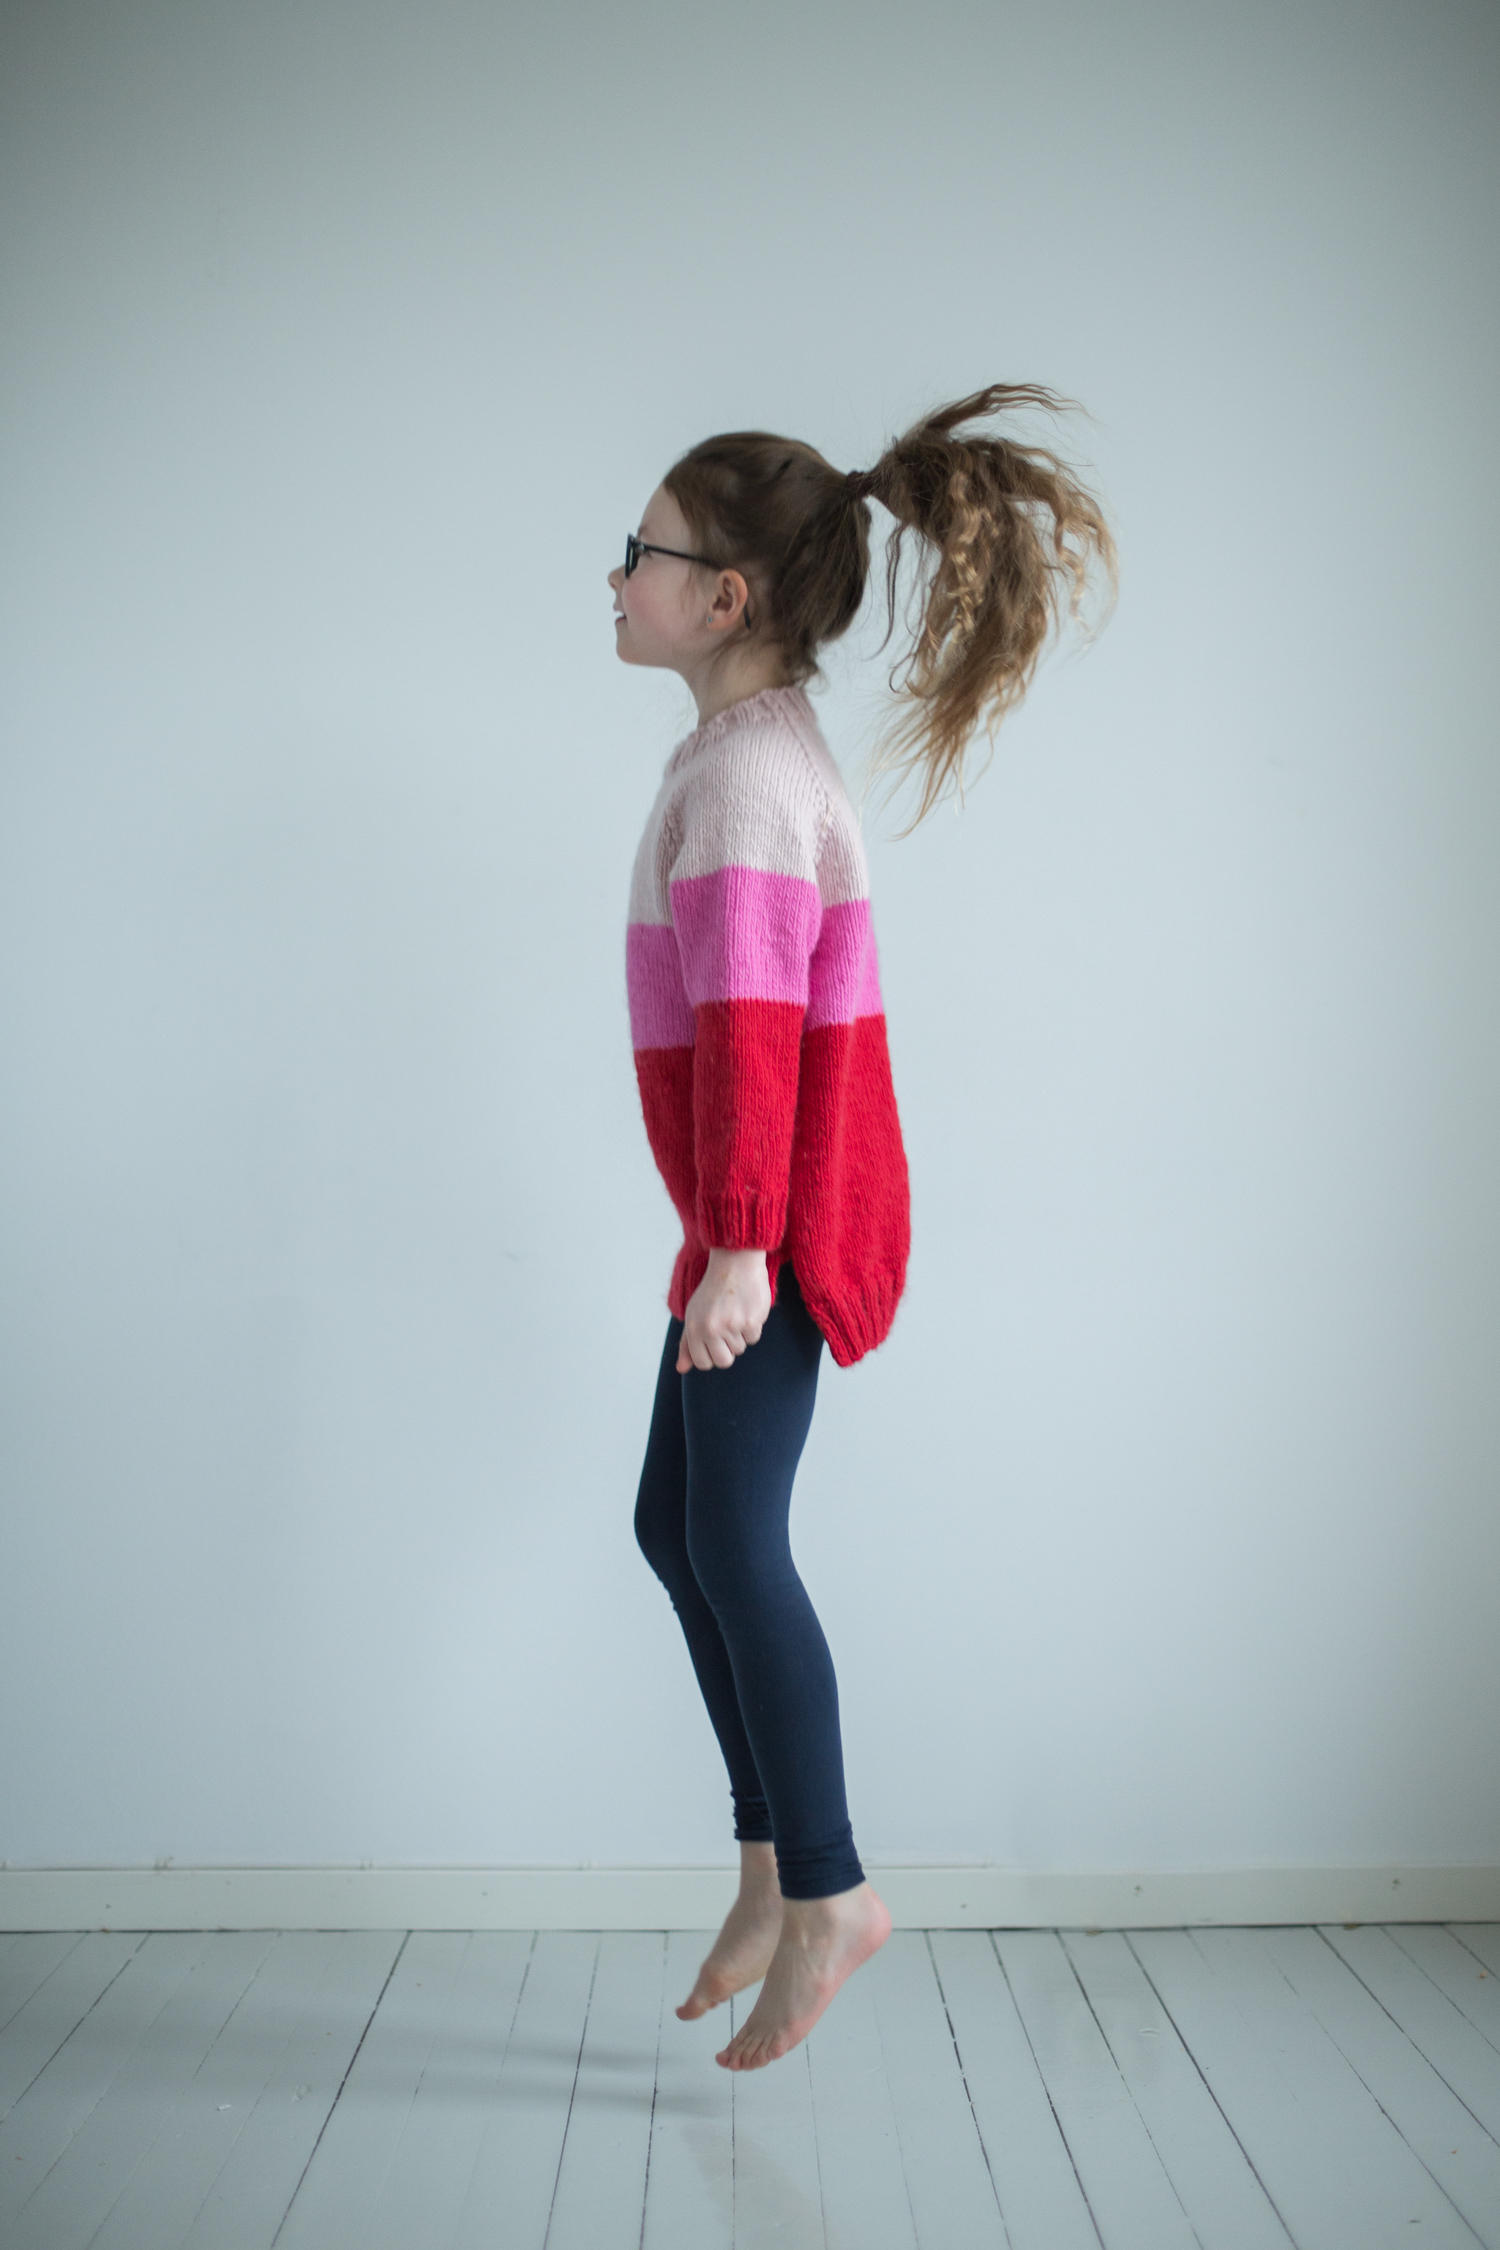  - Jubel sweater kids | Knitting pattern for kids sweater - by HipKnitShop - 12/02/2018